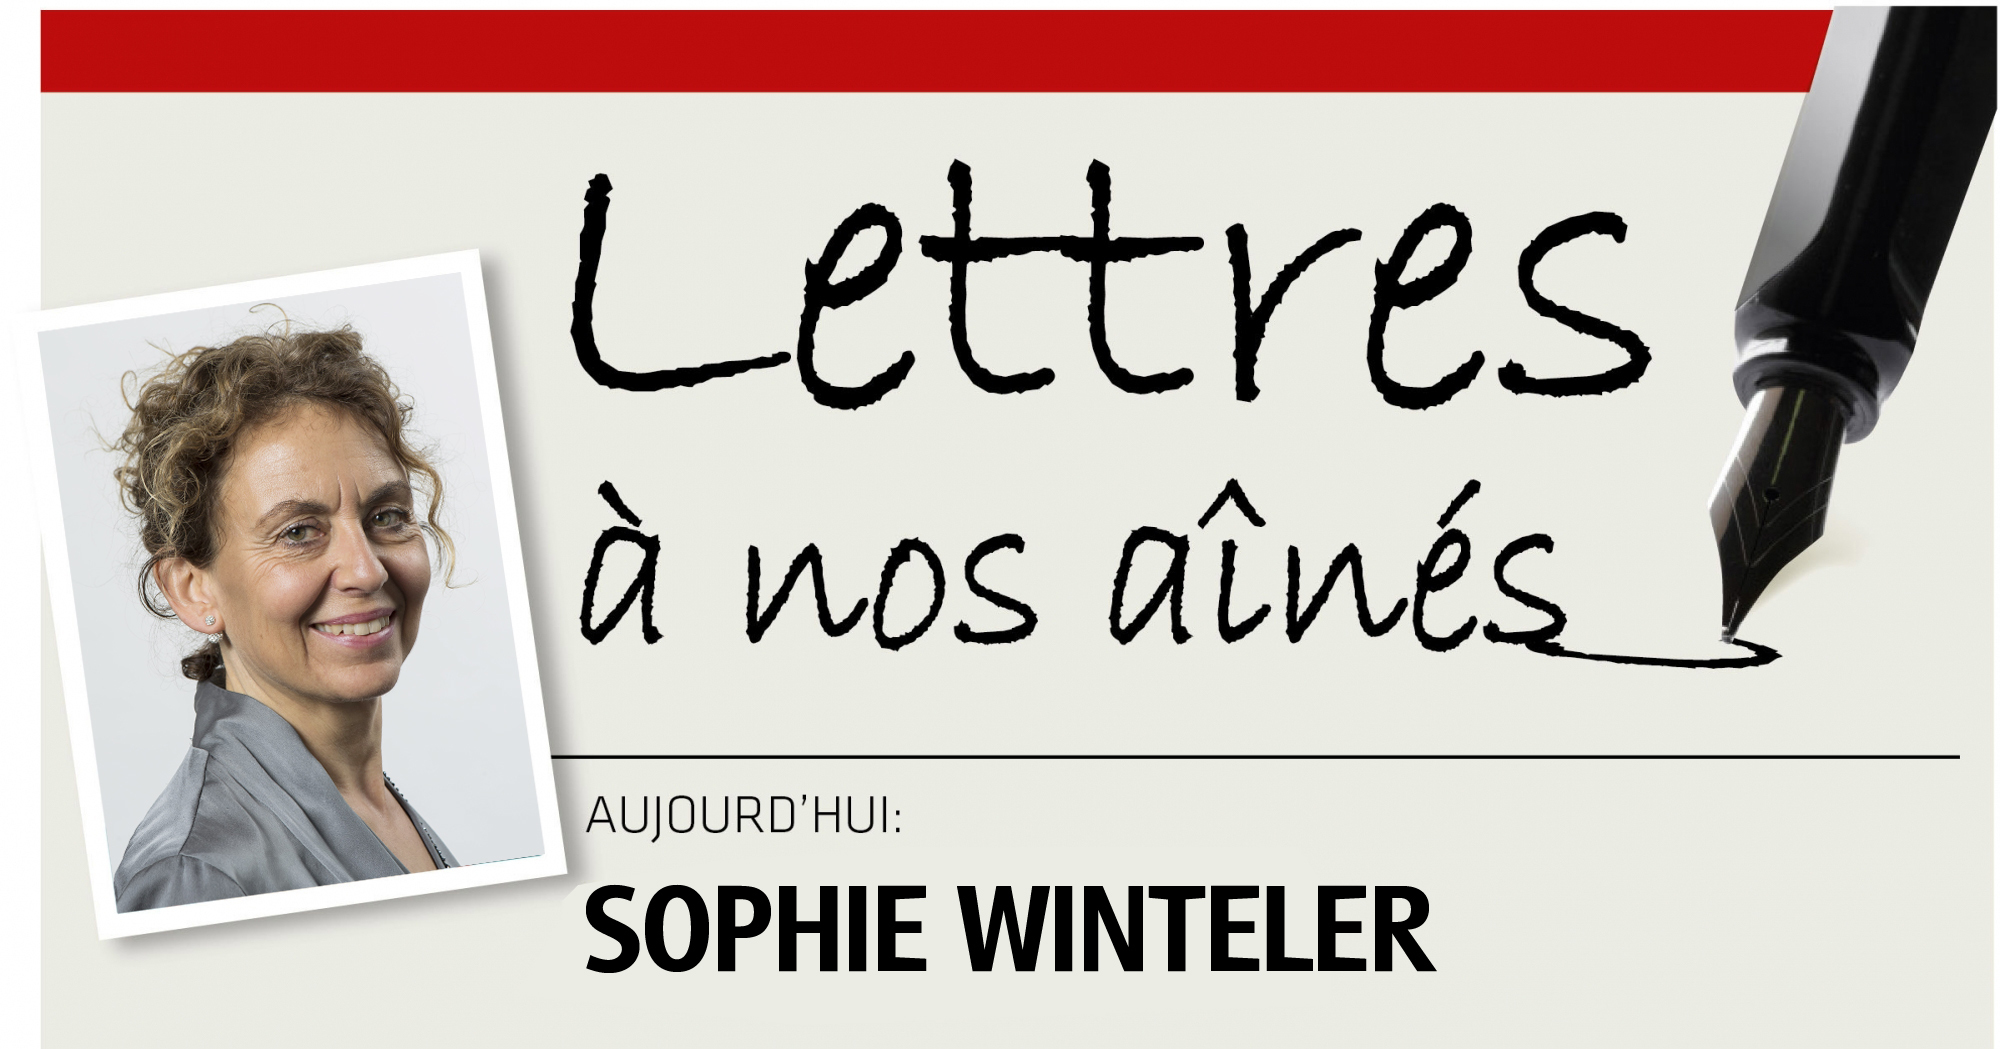 Sophie Winteler